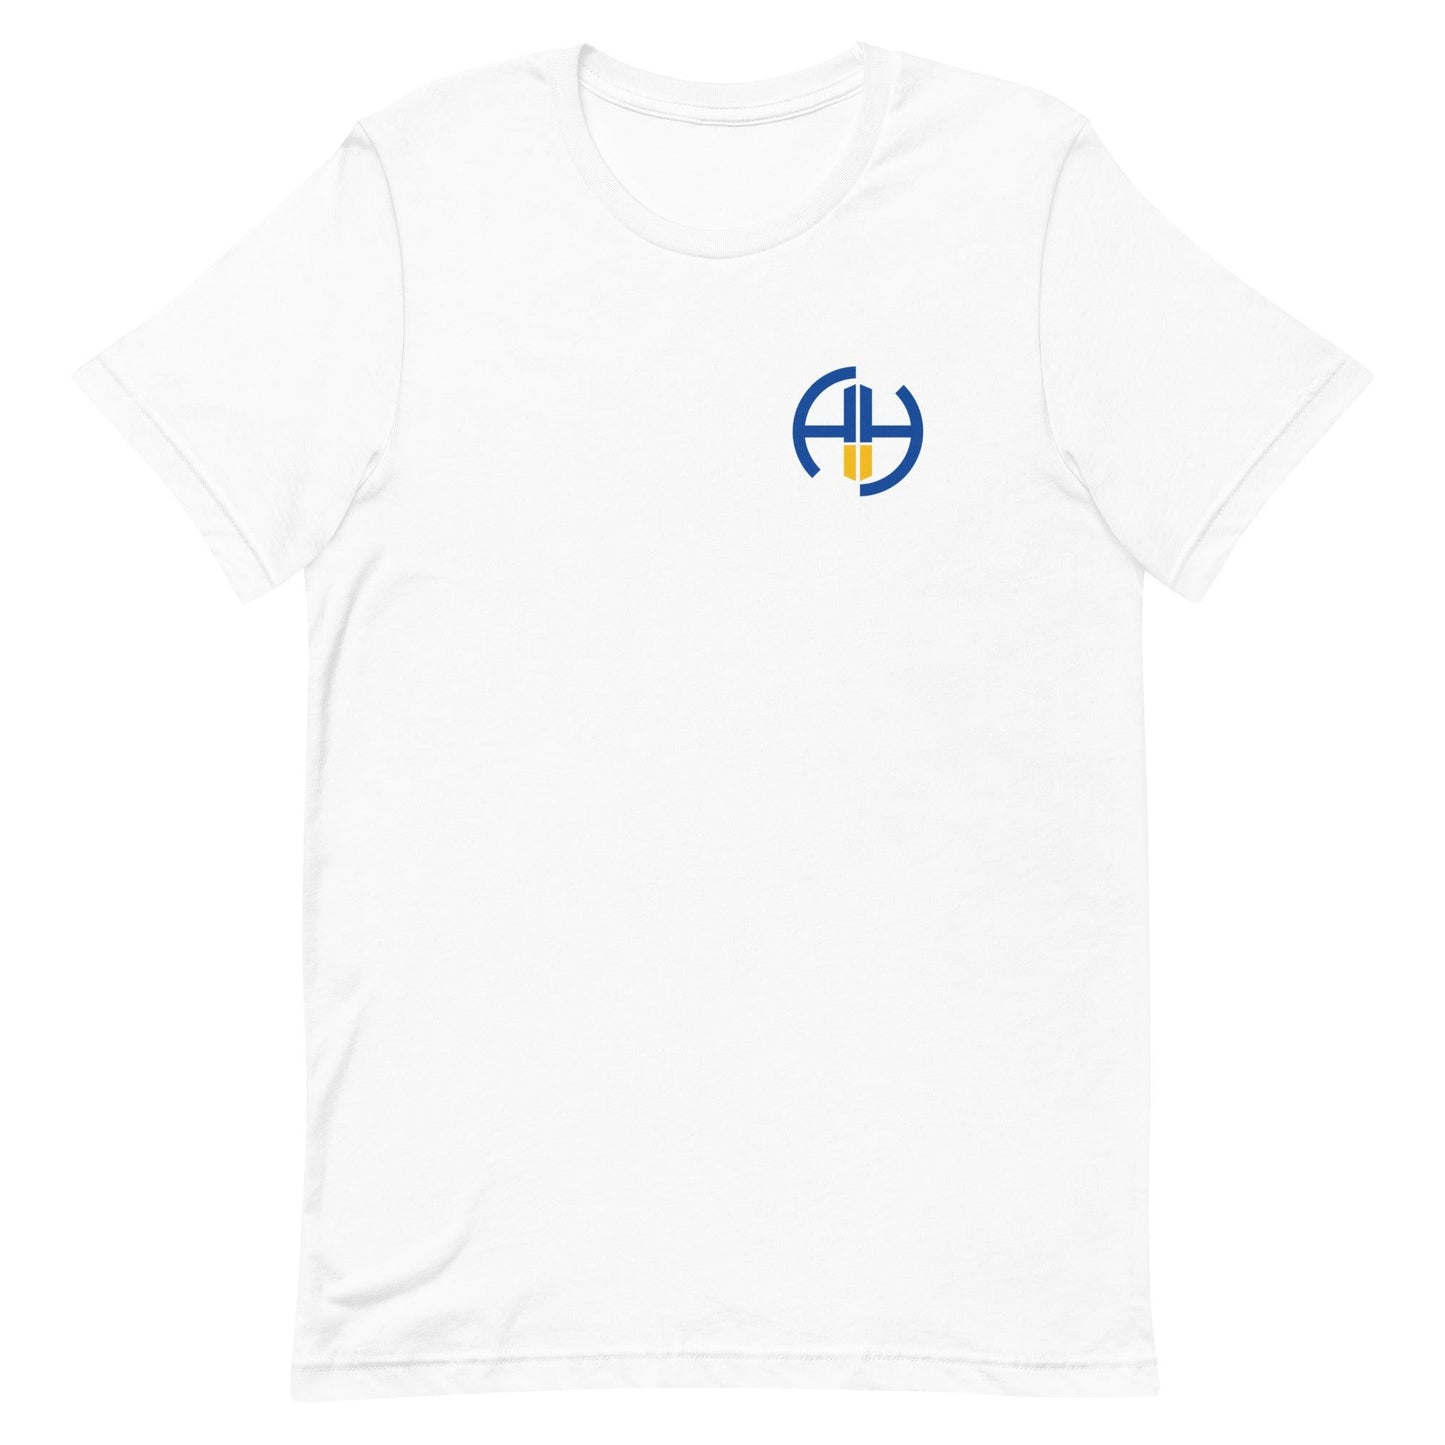 Antoine Holloway II "AHII" t-shirt - Fan Arch